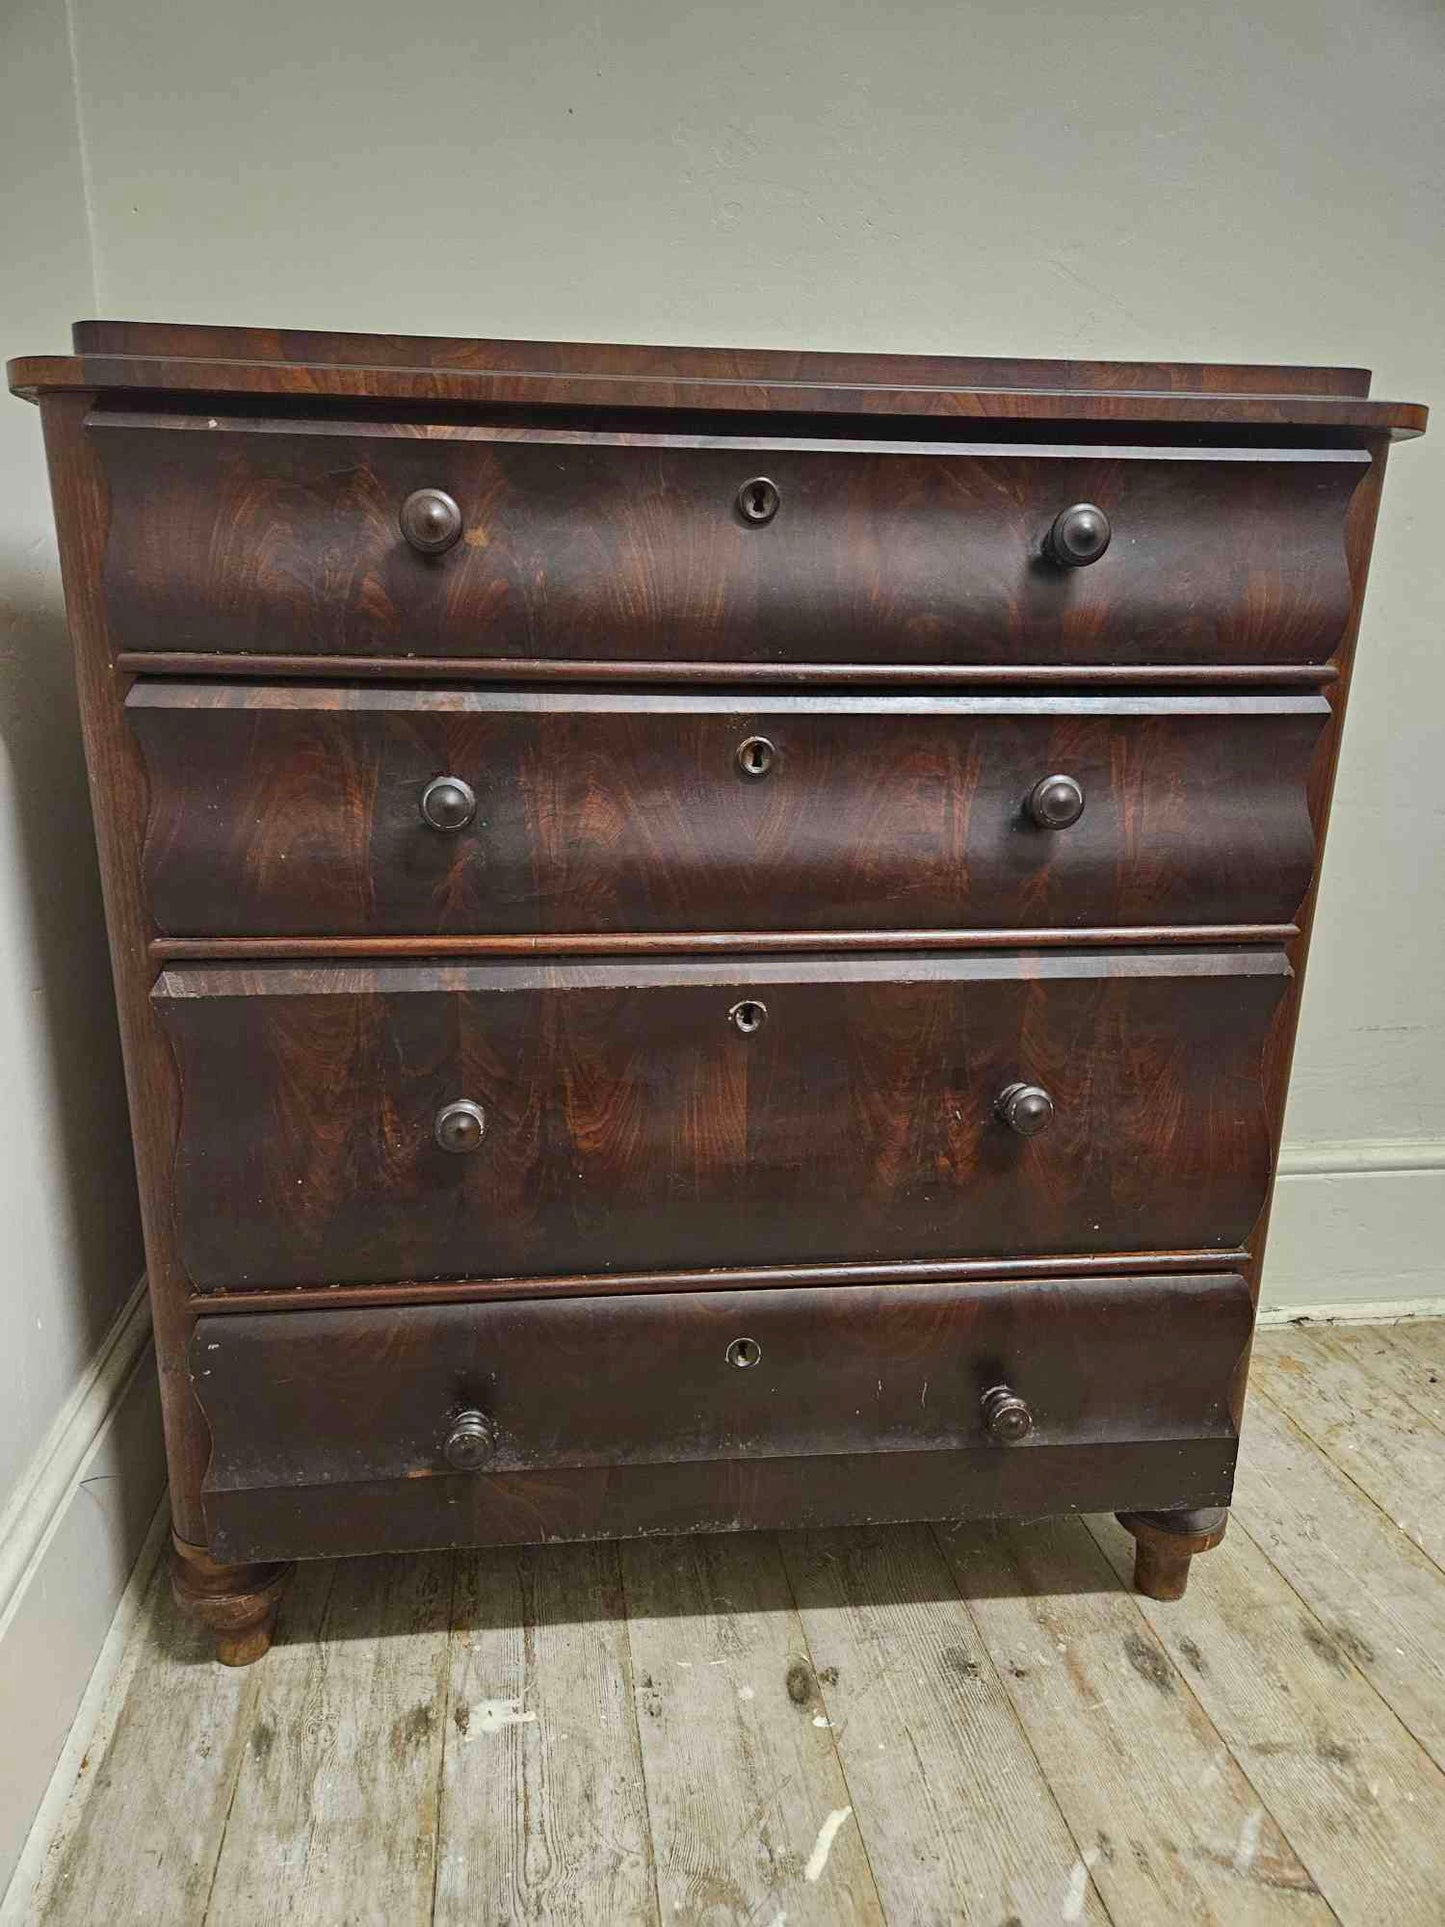 Mahogany chest of drawers